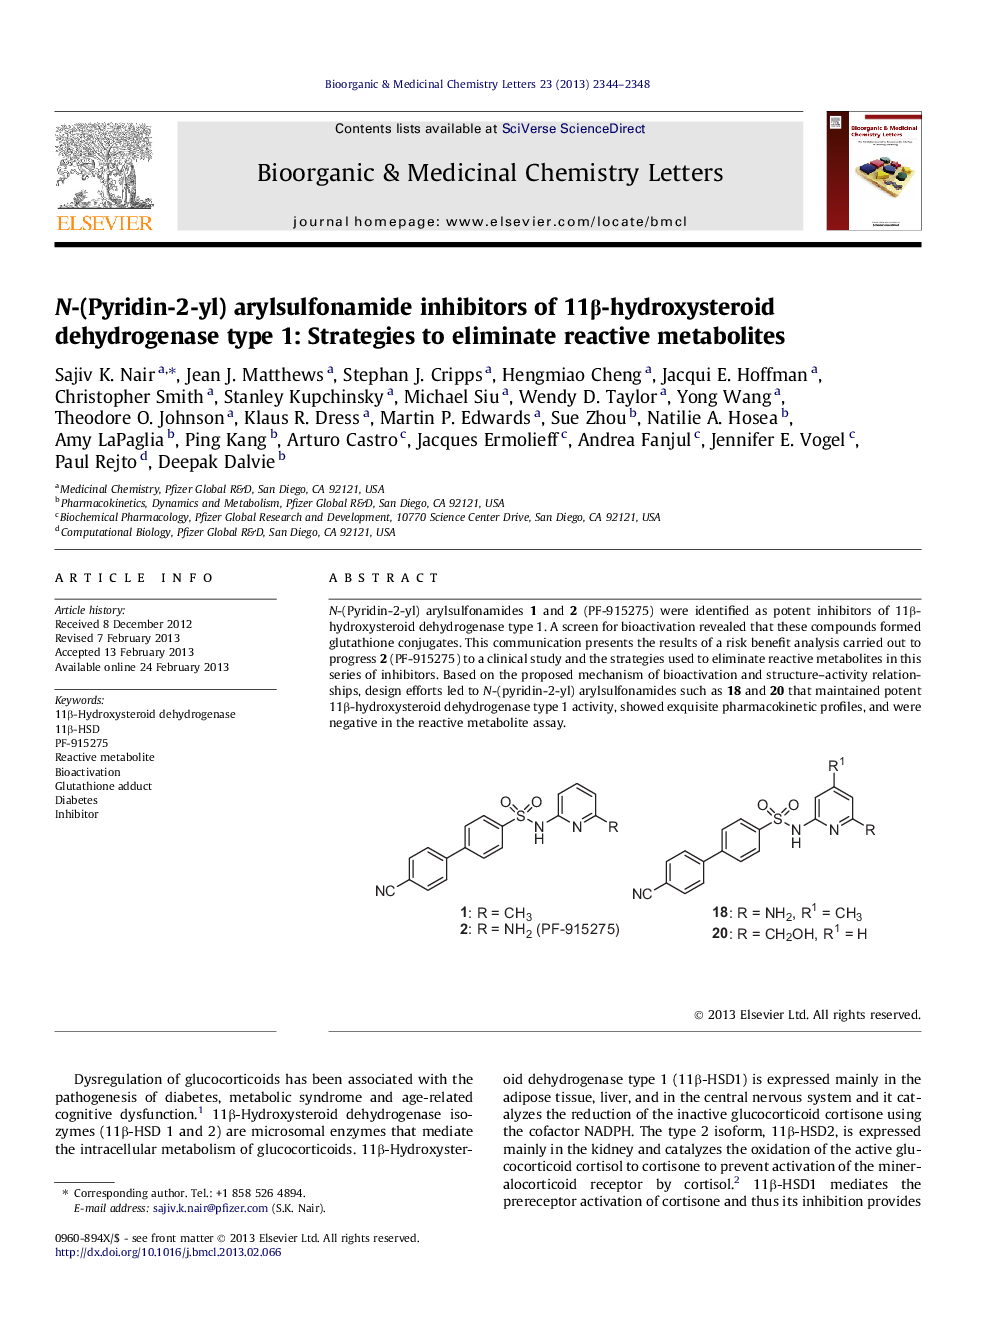 N-(Pyridin-2-yl) arylsulfonamide inhibitors of 11Î²-hydroxysteroid dehydrogenase type 1: Strategies to eliminate reactive metabolites